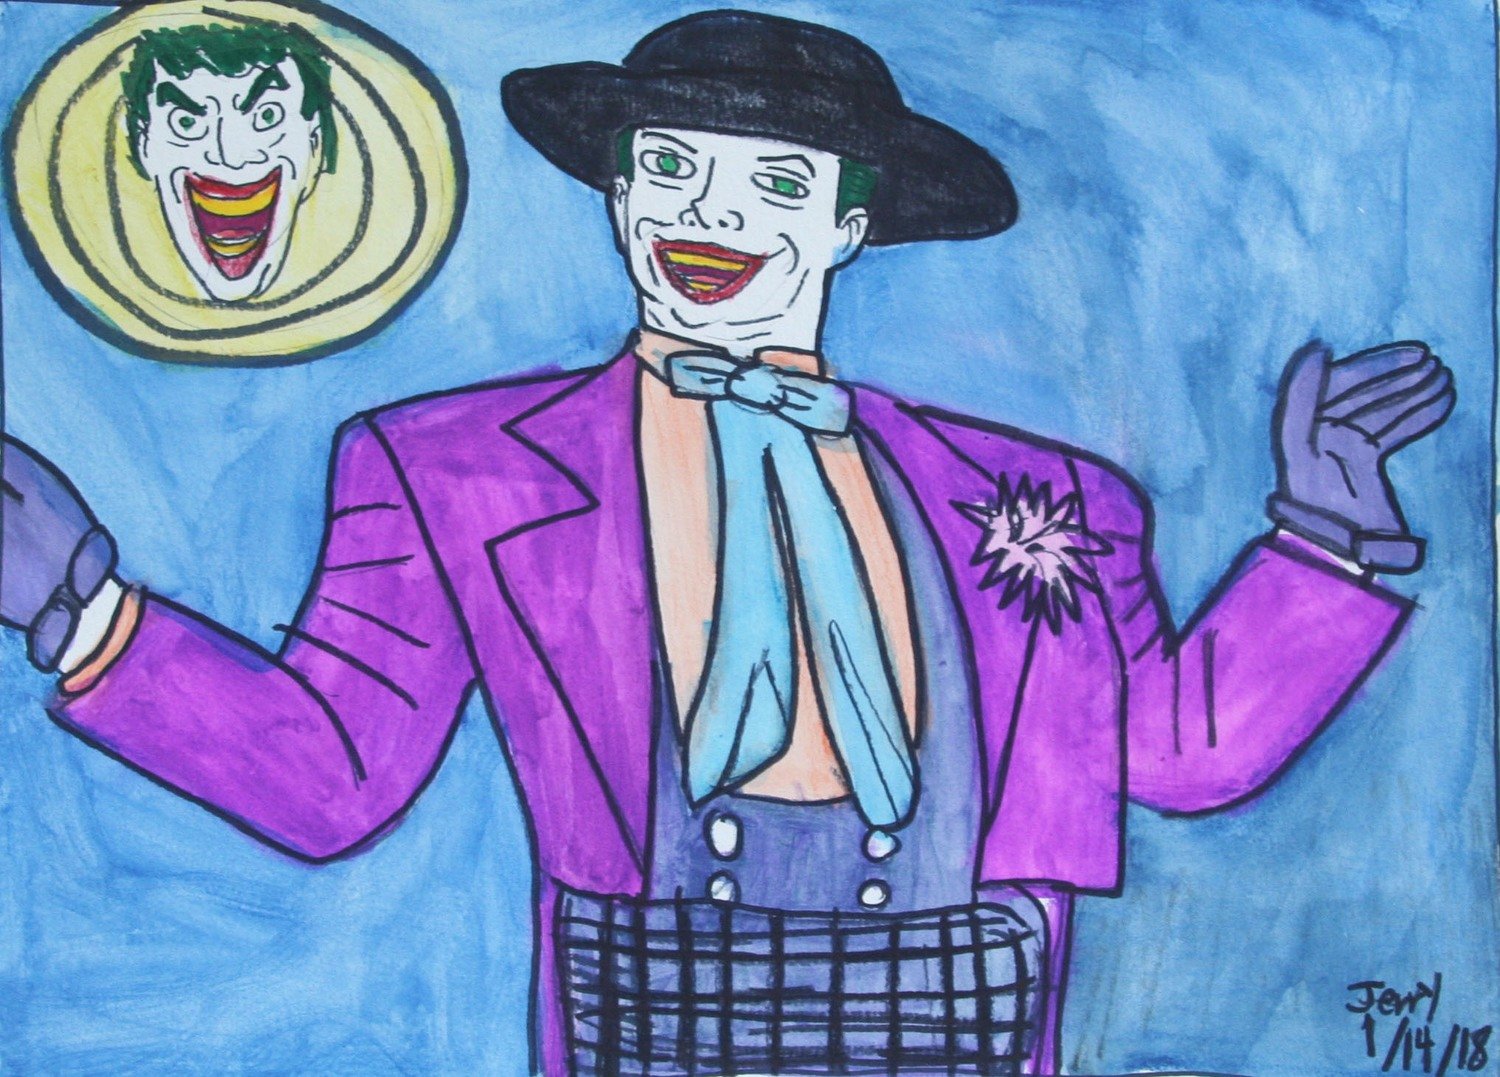 Jack Nicholson as The Joker